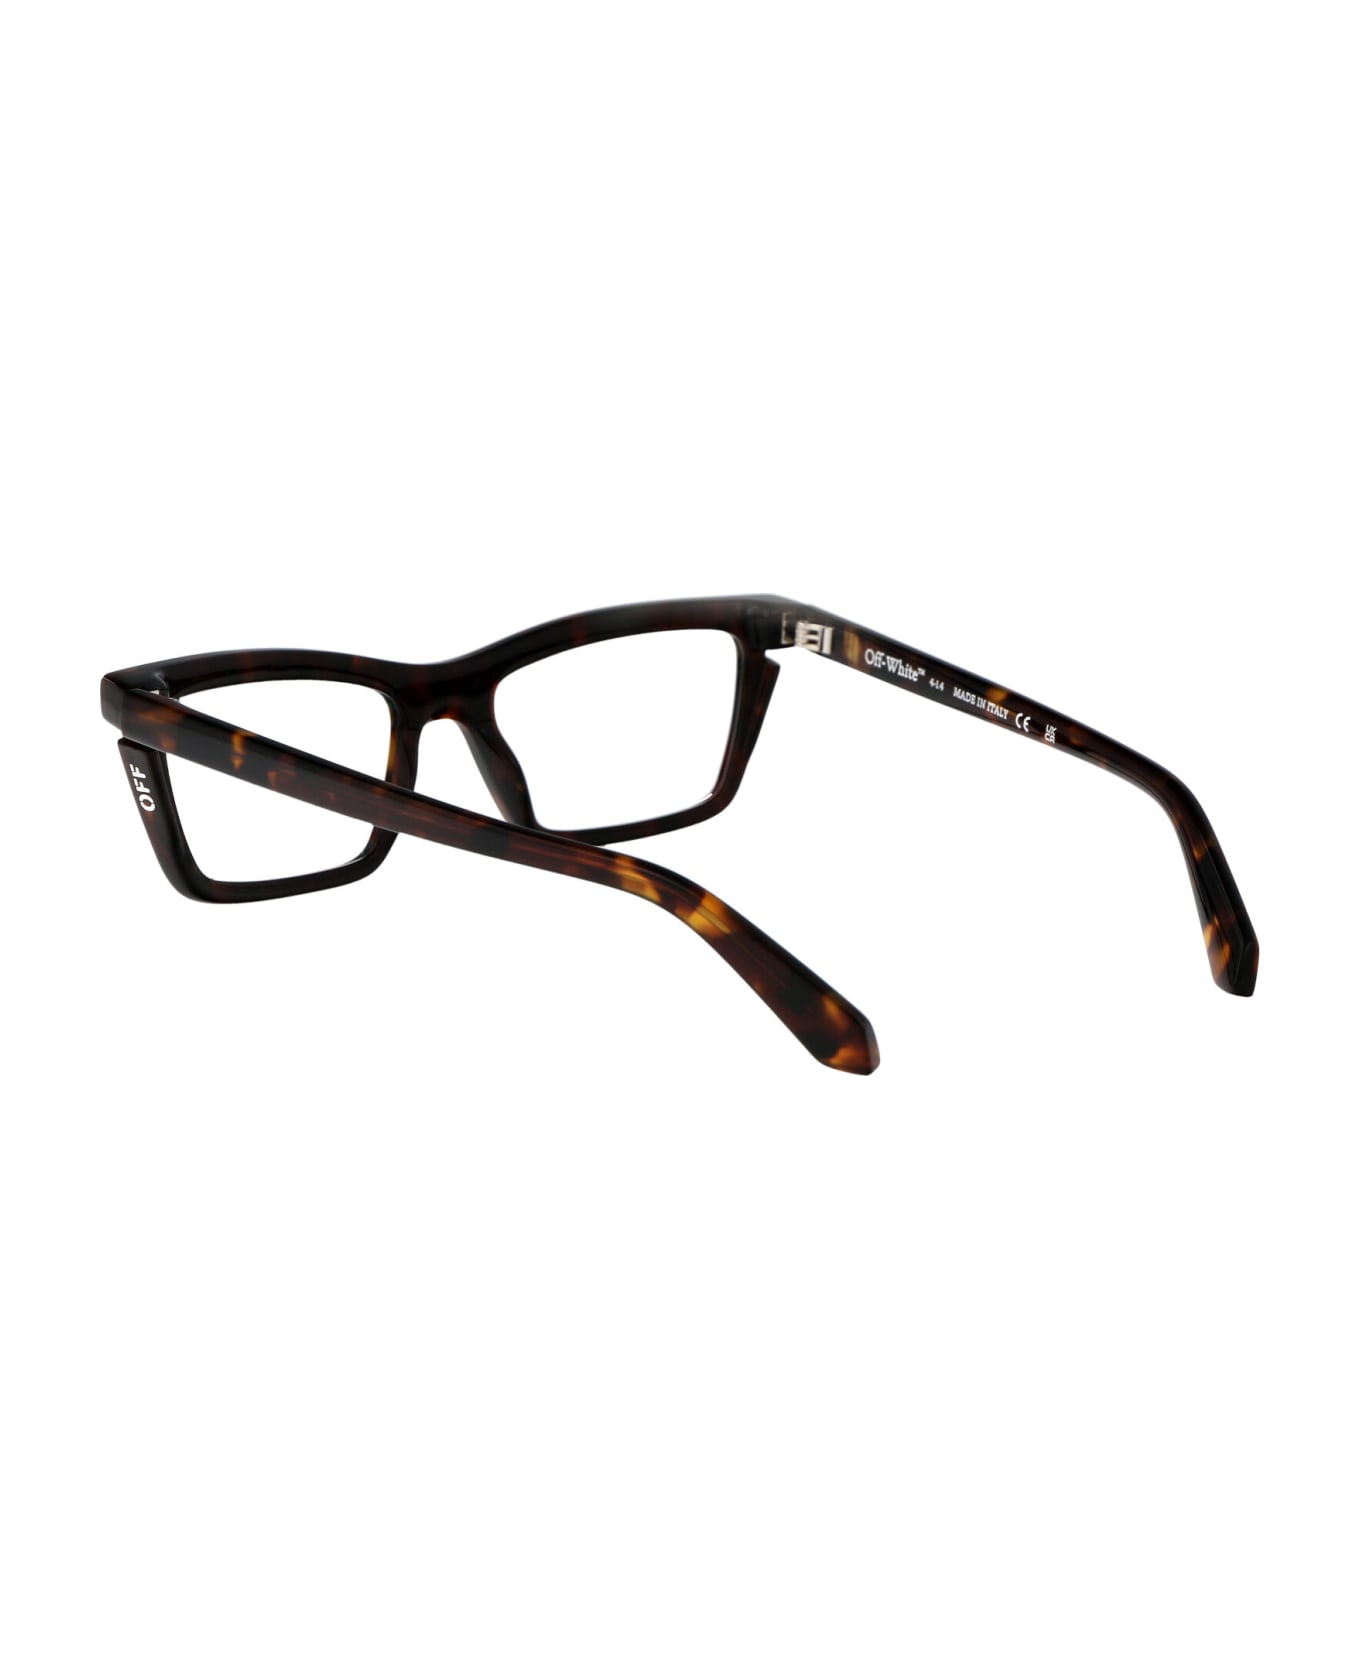 Off-White Optical Style 50 Glasses - 6000 HAVANA